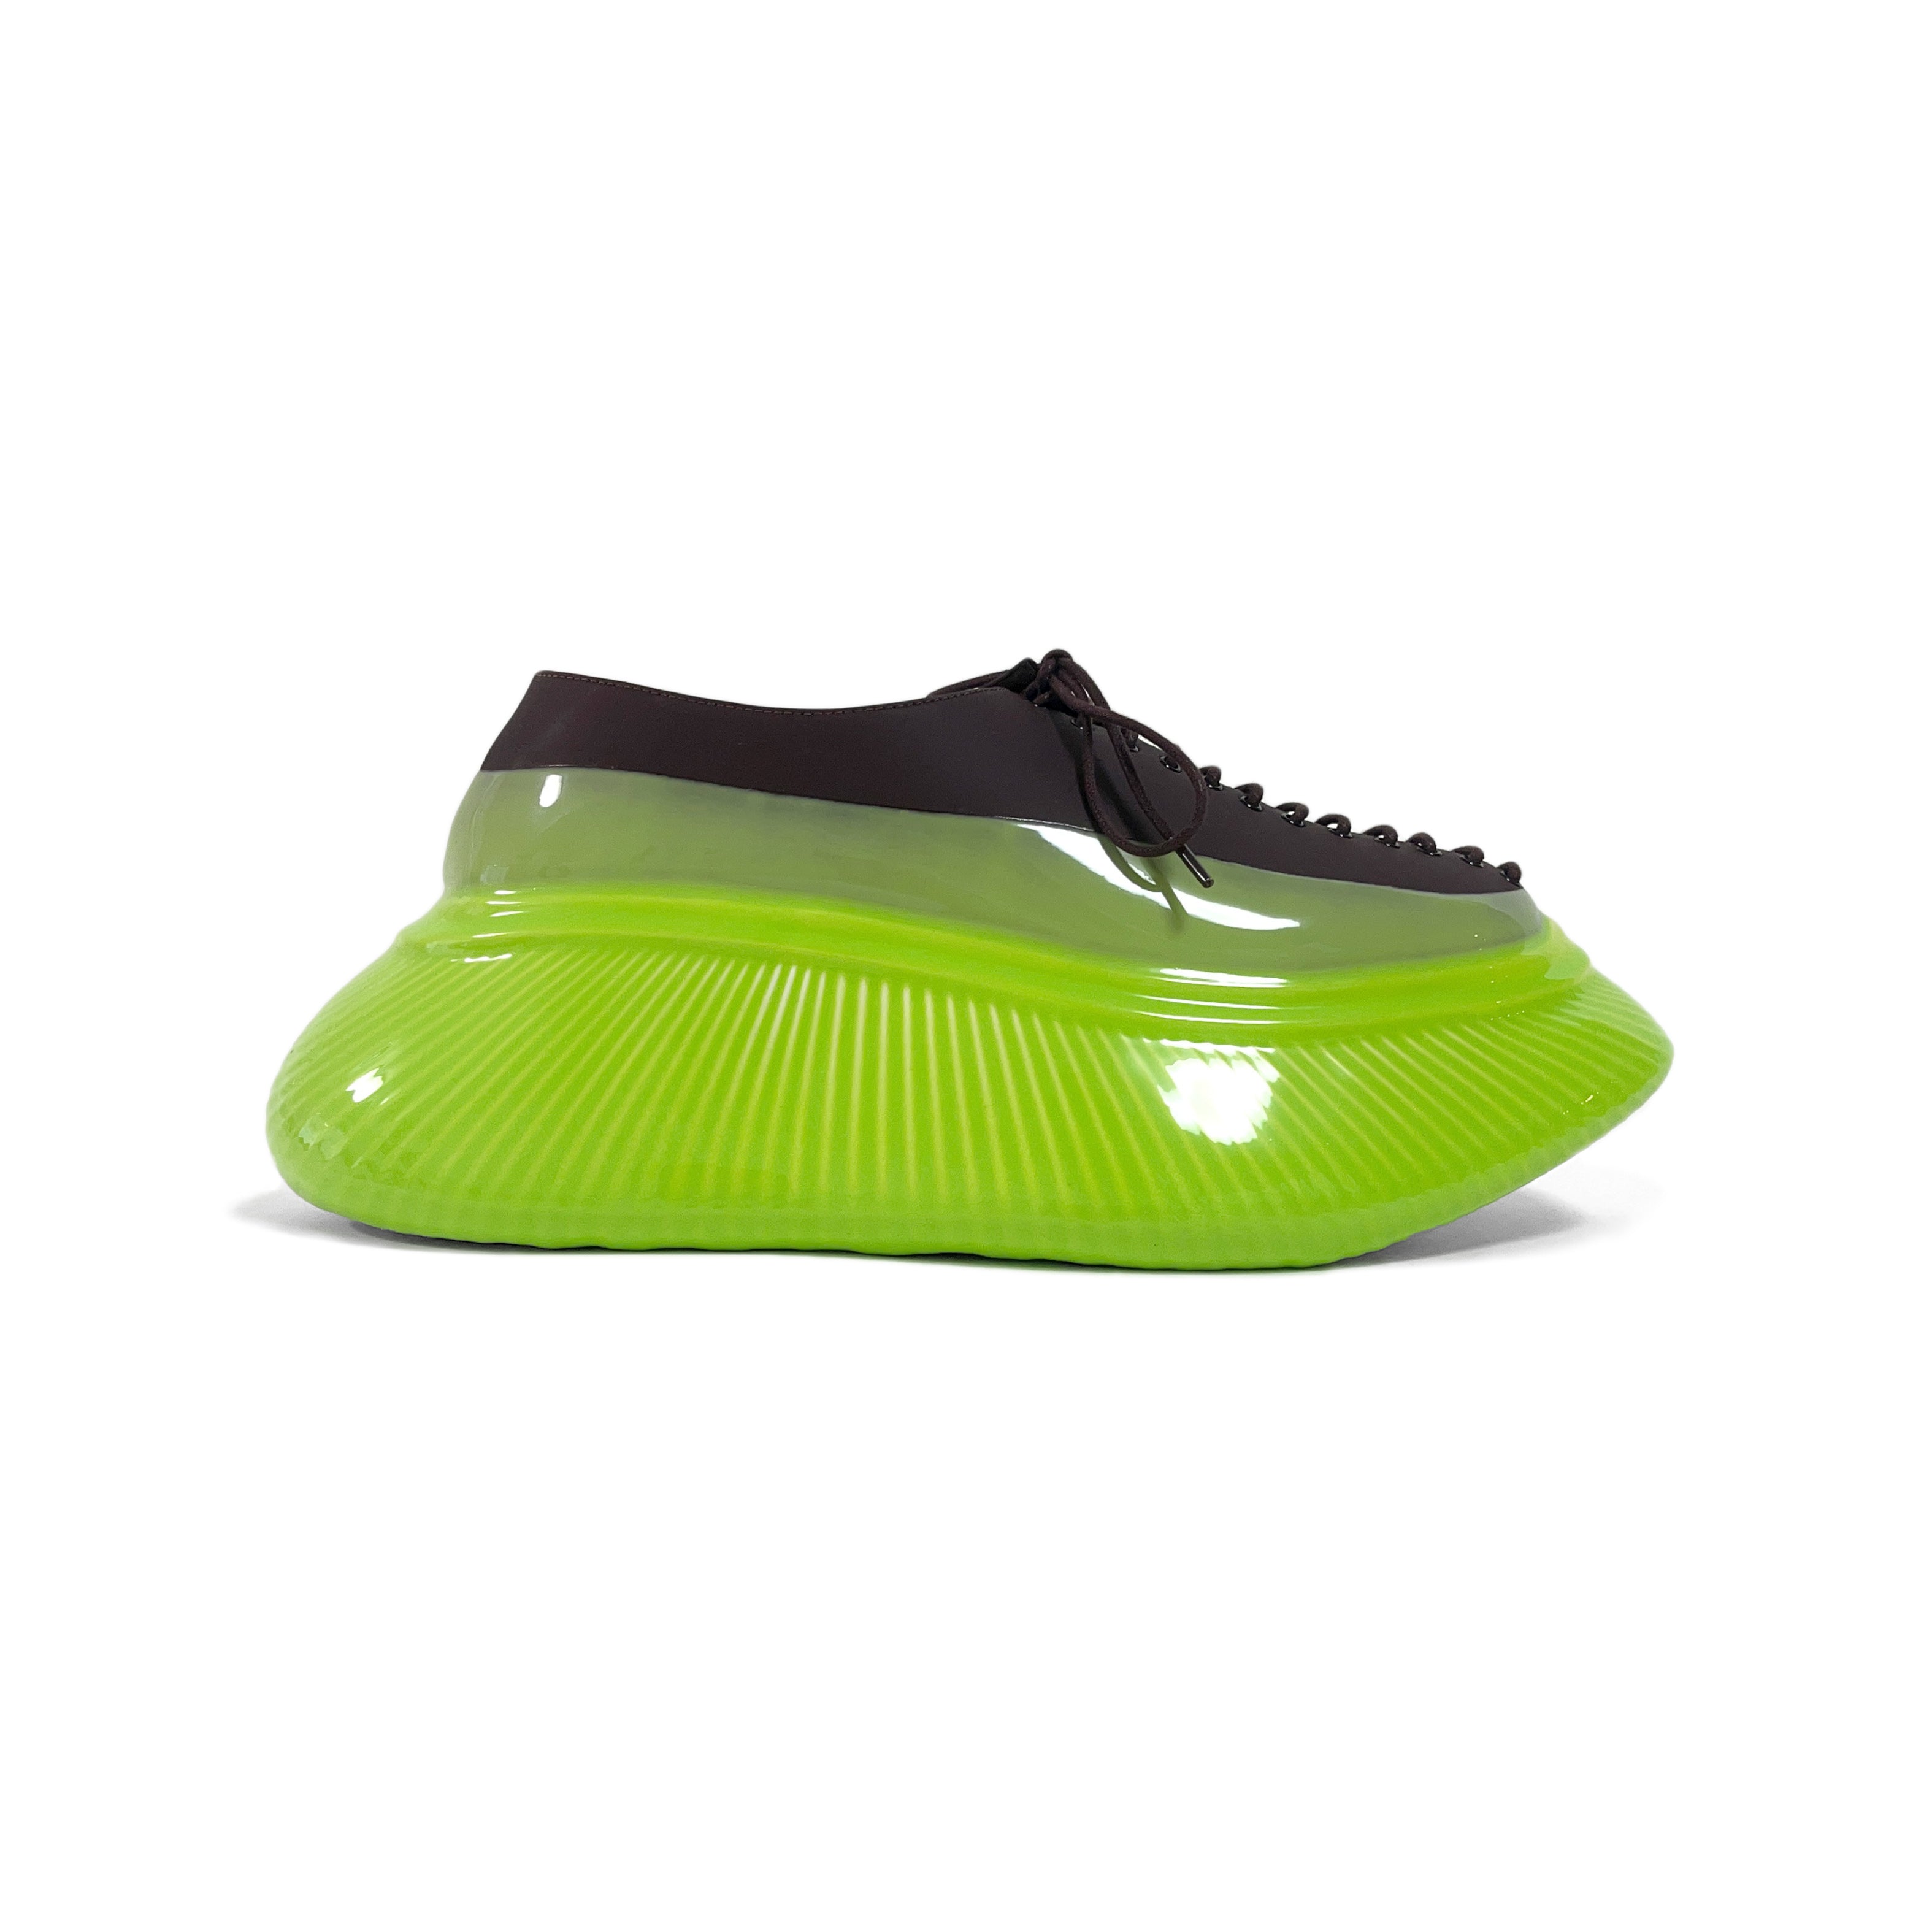 Liver shoes Matt Brown × Lime DIP